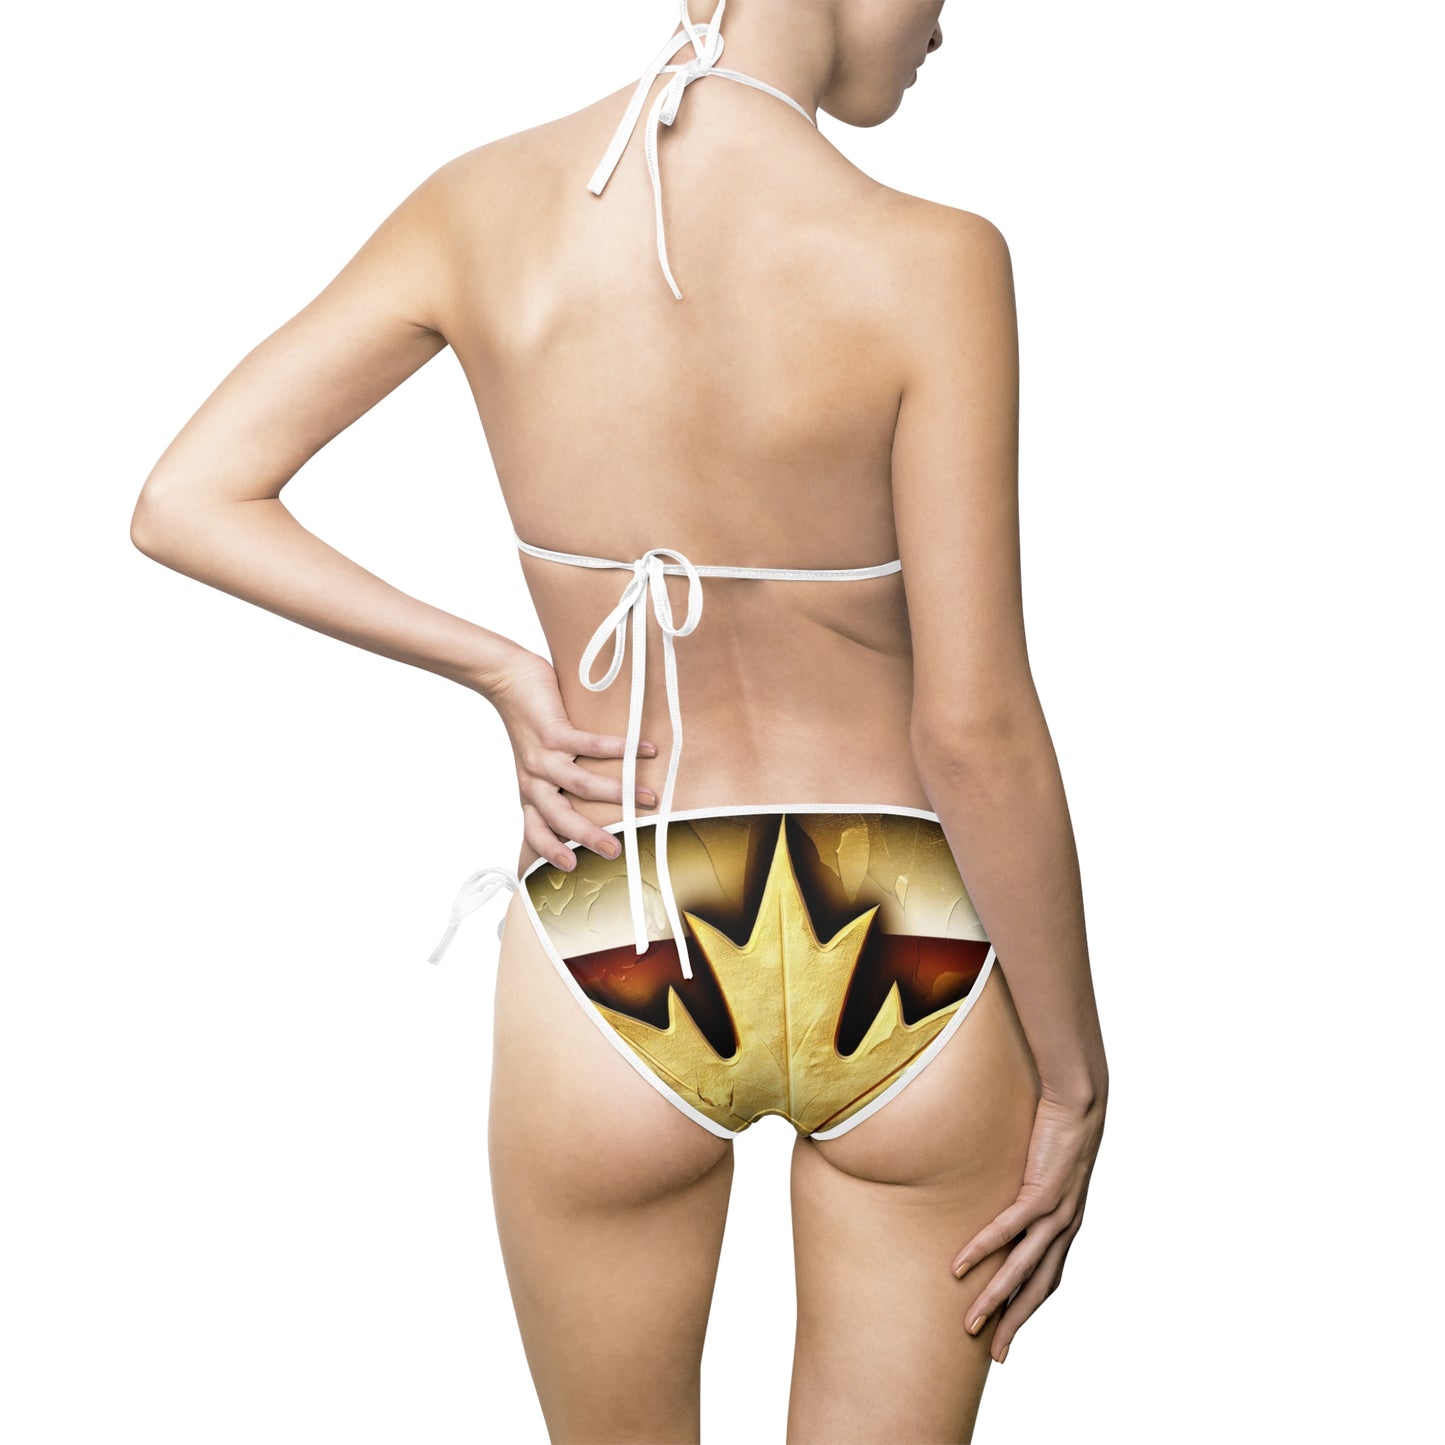 Fashion Women's Bikini Swimsuit - Rustic-Gold Maple Leaf Swimwear Design